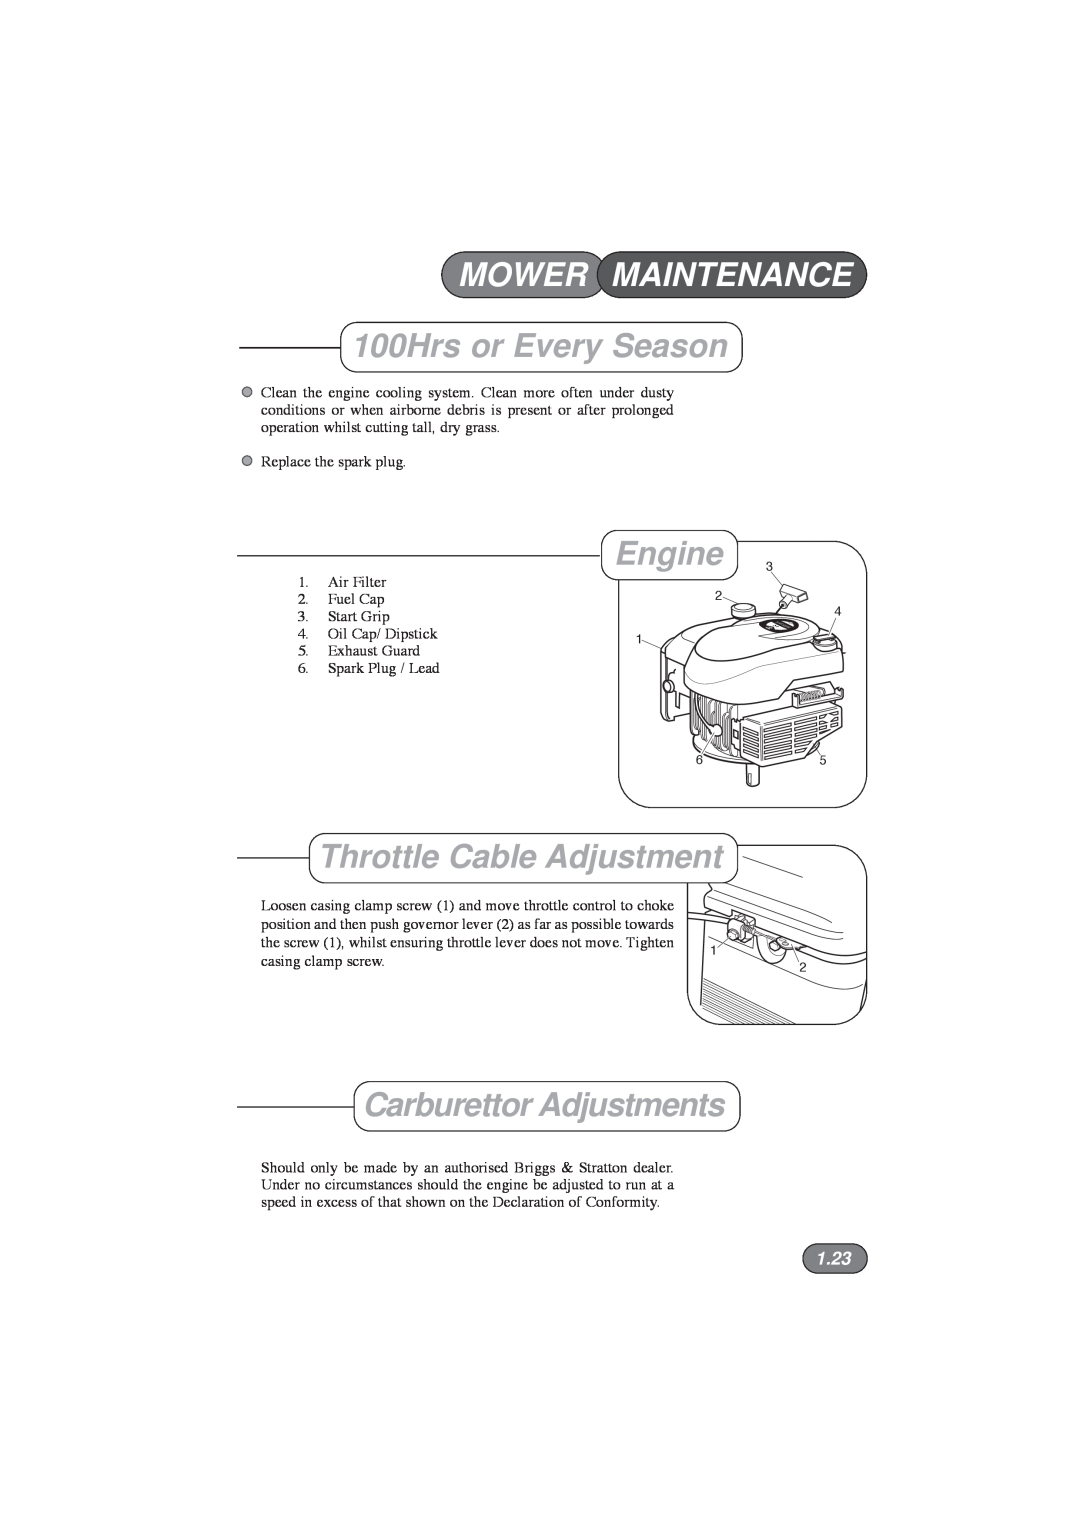 Hayter Mowers 410E Mower Maintenance, 100Hrs or Every Season, Engine, Throttle Cable Adjustment, Carburettor Adjustments 